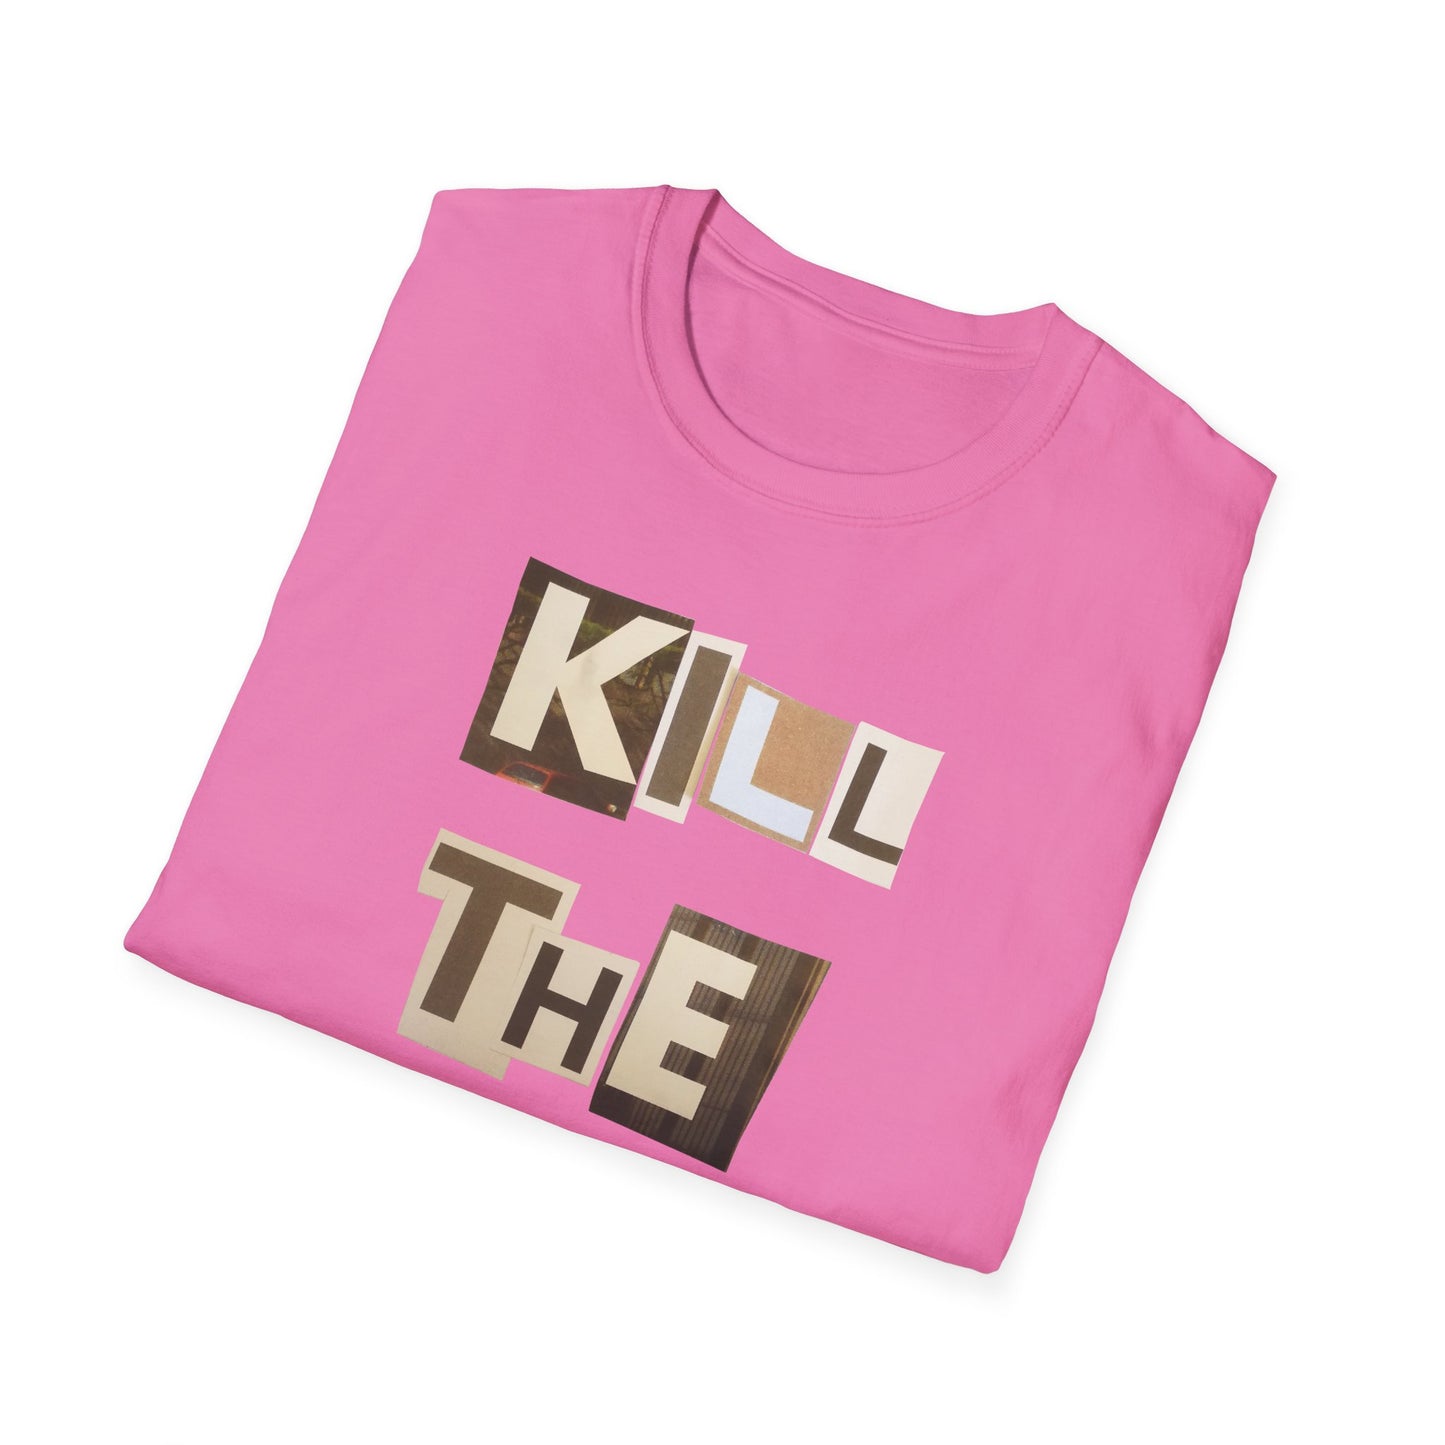 "kill the rich" Tin Foil Wear vs. Kaspar Colling Nielsen